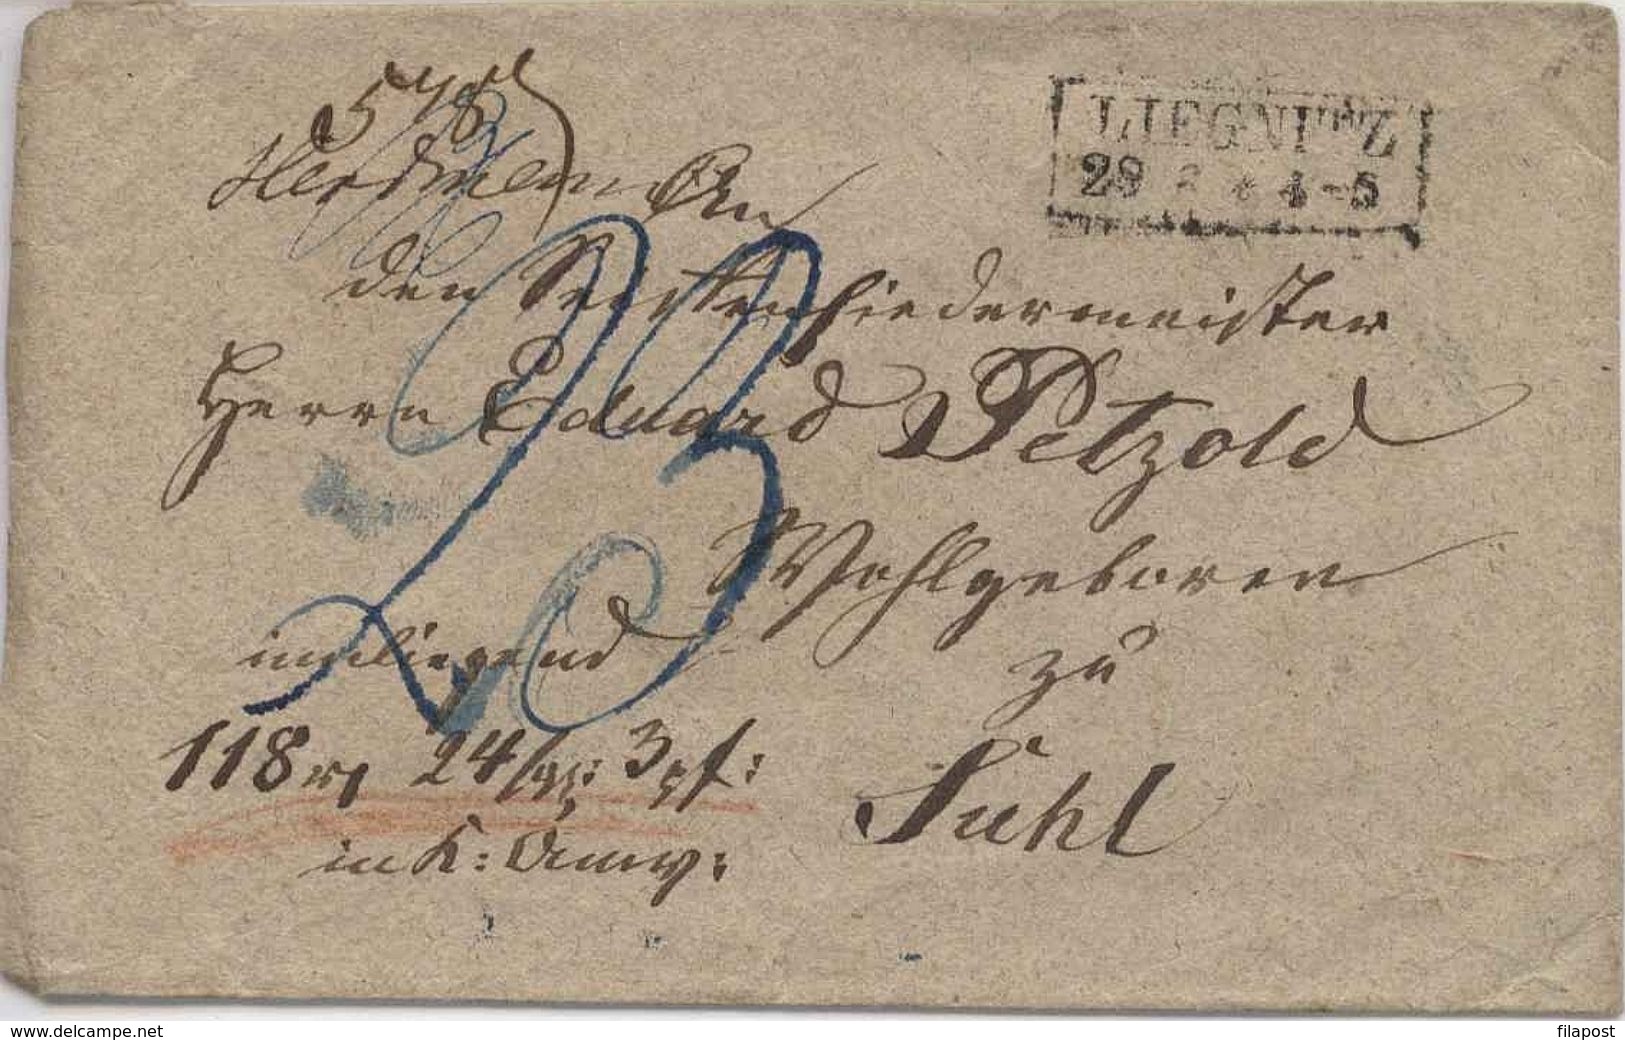 Poland 1828, Letter From Liegnitz - Legnica To Suhl Valuable Letter W301. - ...-1860 Vorphilatelie